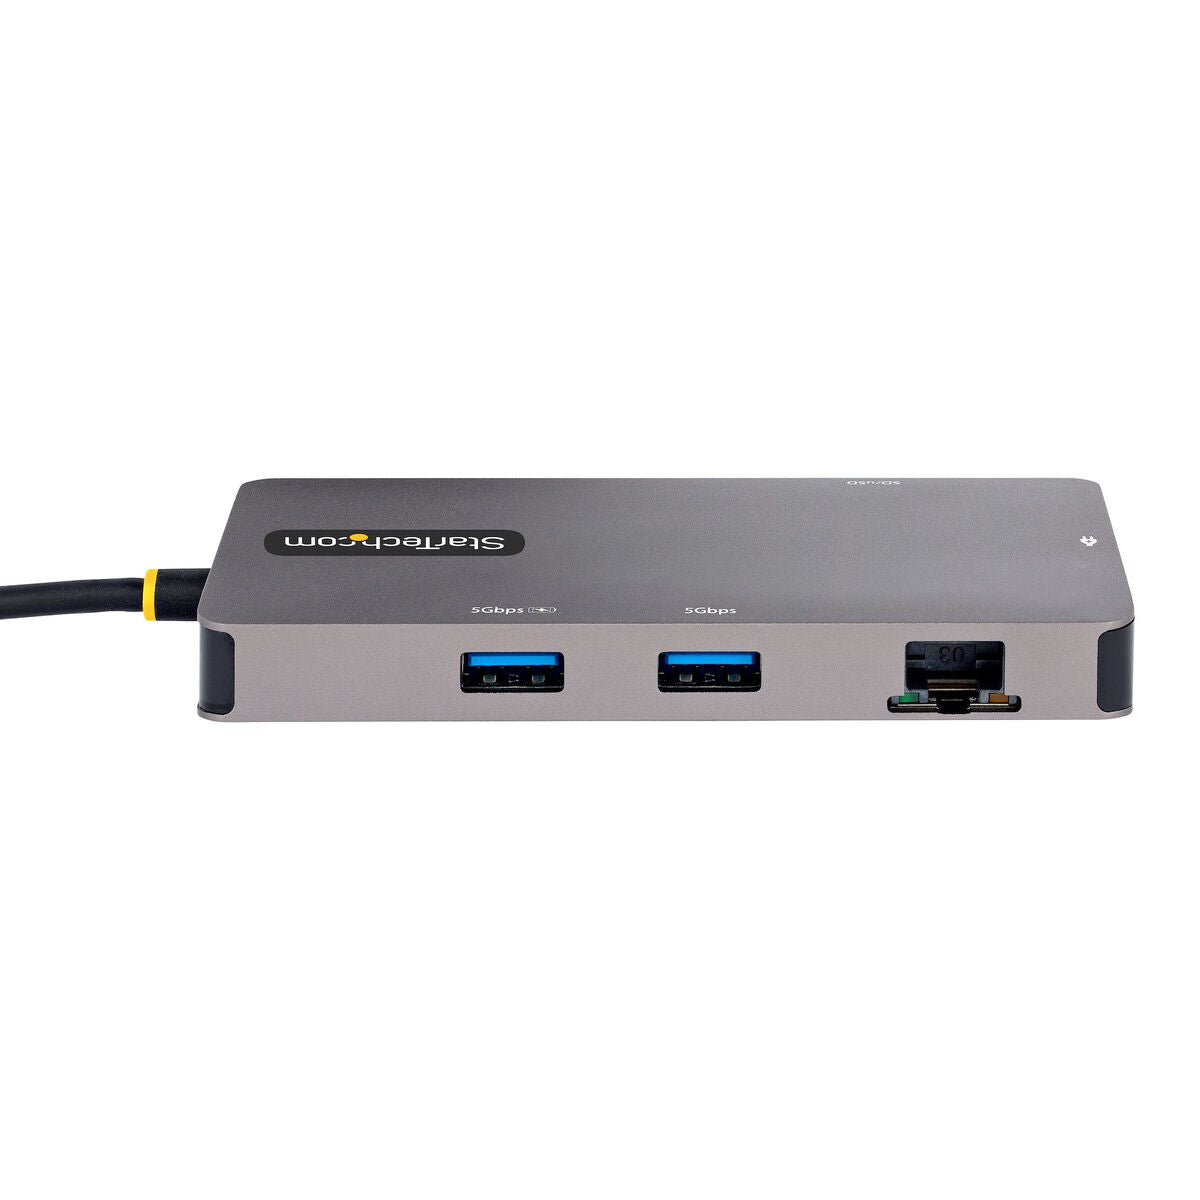 Adattatore USB-C Startech 120B-USBC-MULTIPORT Grigio